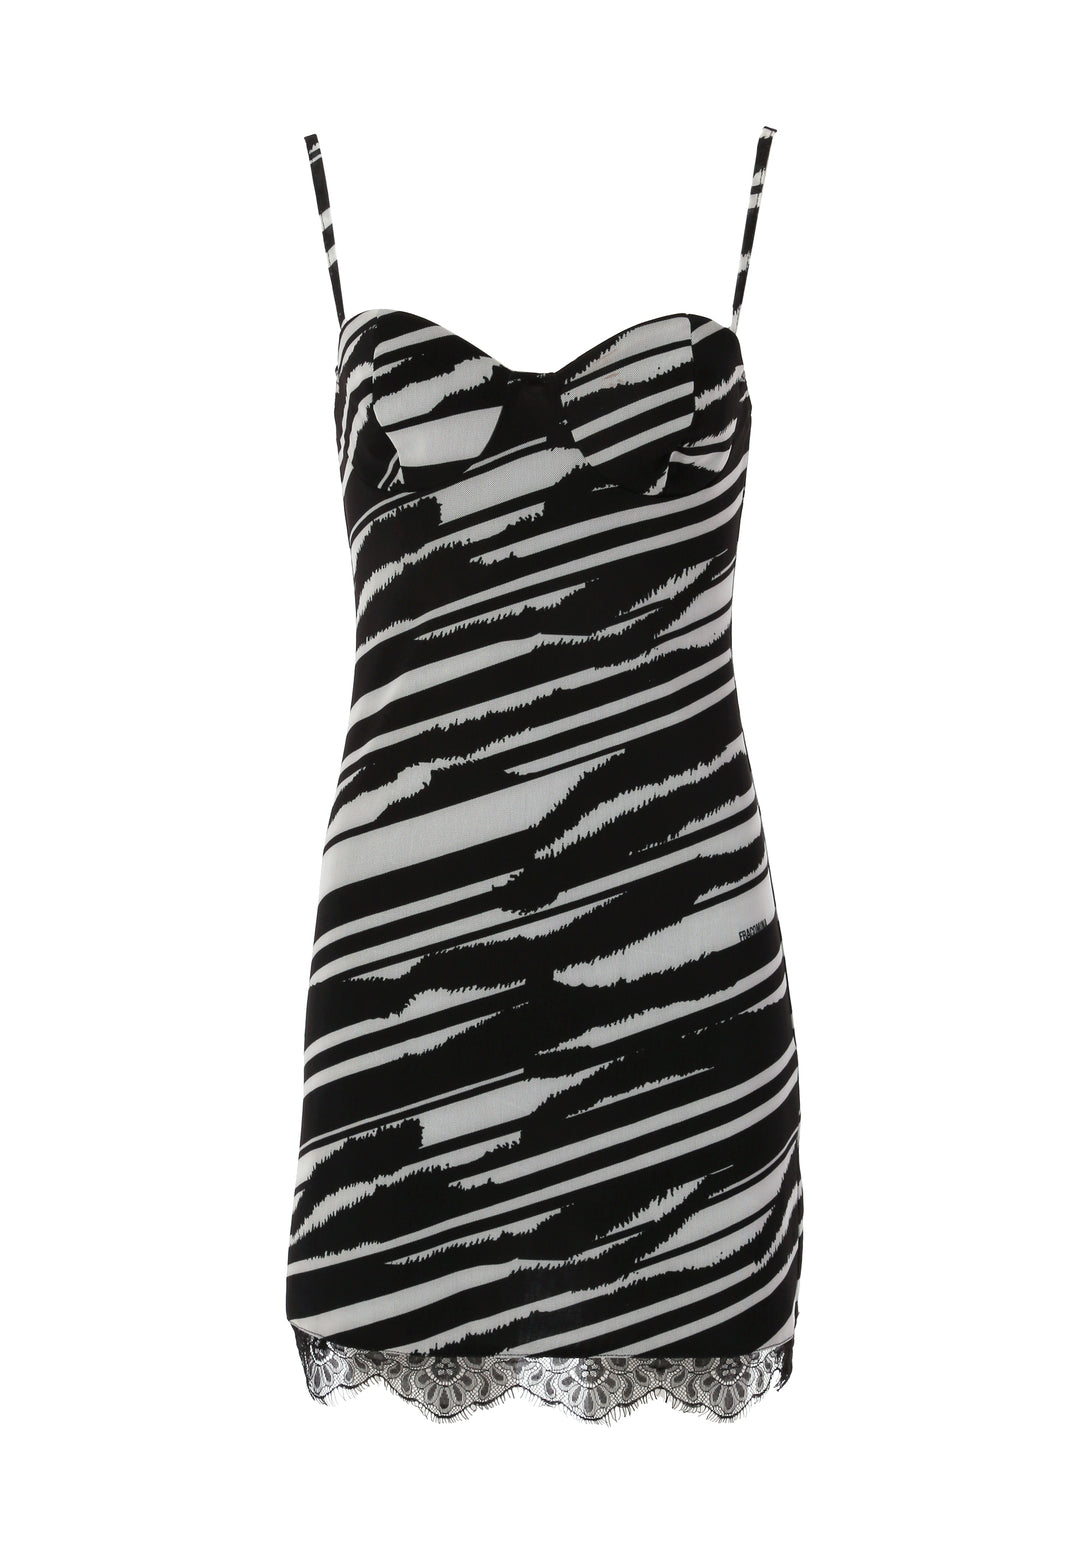 Mini sleeveless dress with zebra-striped pattern